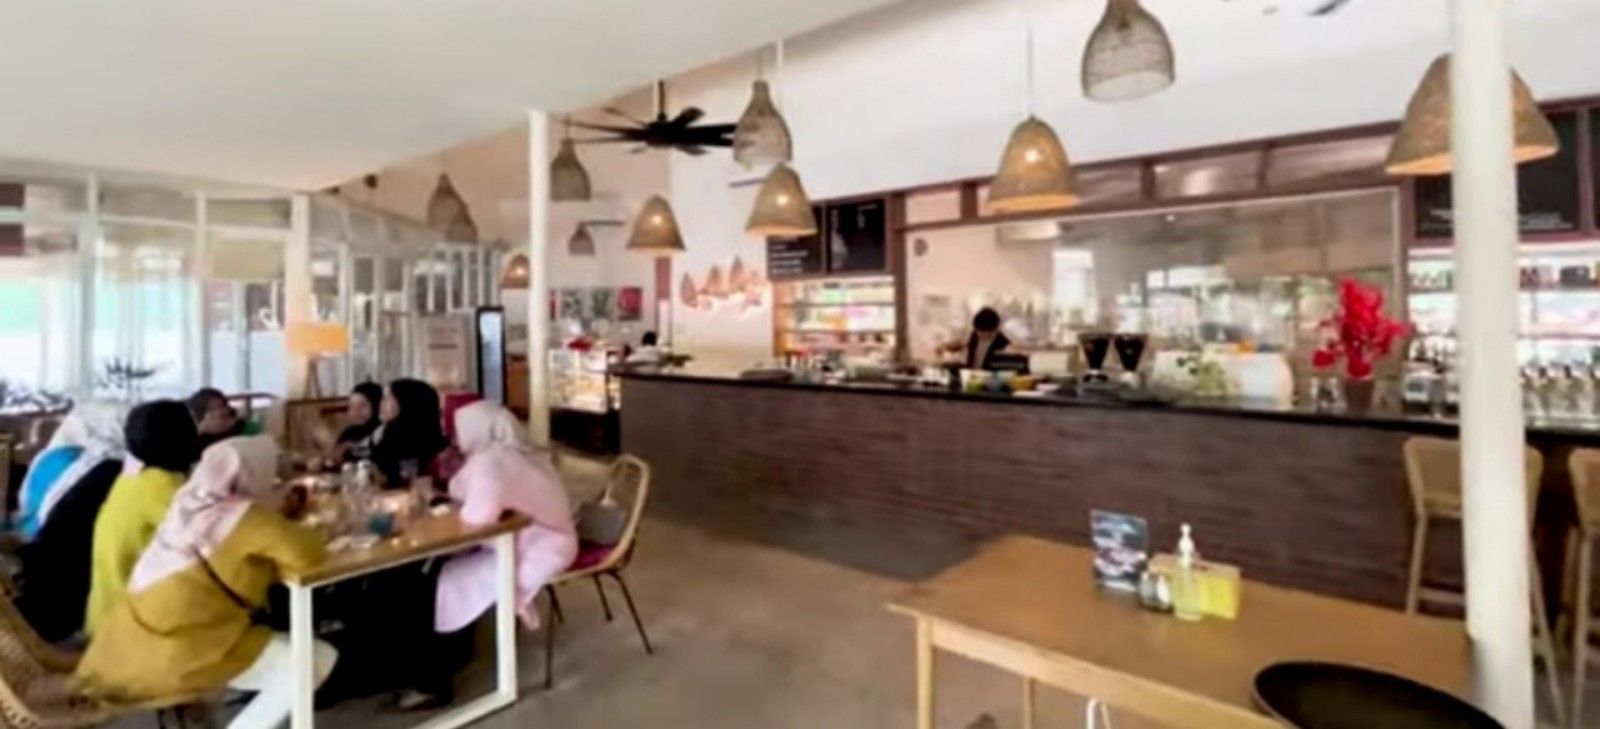 Emerald Tree Resto dan Coffee Bar, resto dan cafe cozy di Bintaro Tangerang Selatan Banten/tangkapan layar YouTube/channel Diary Of Pearl 